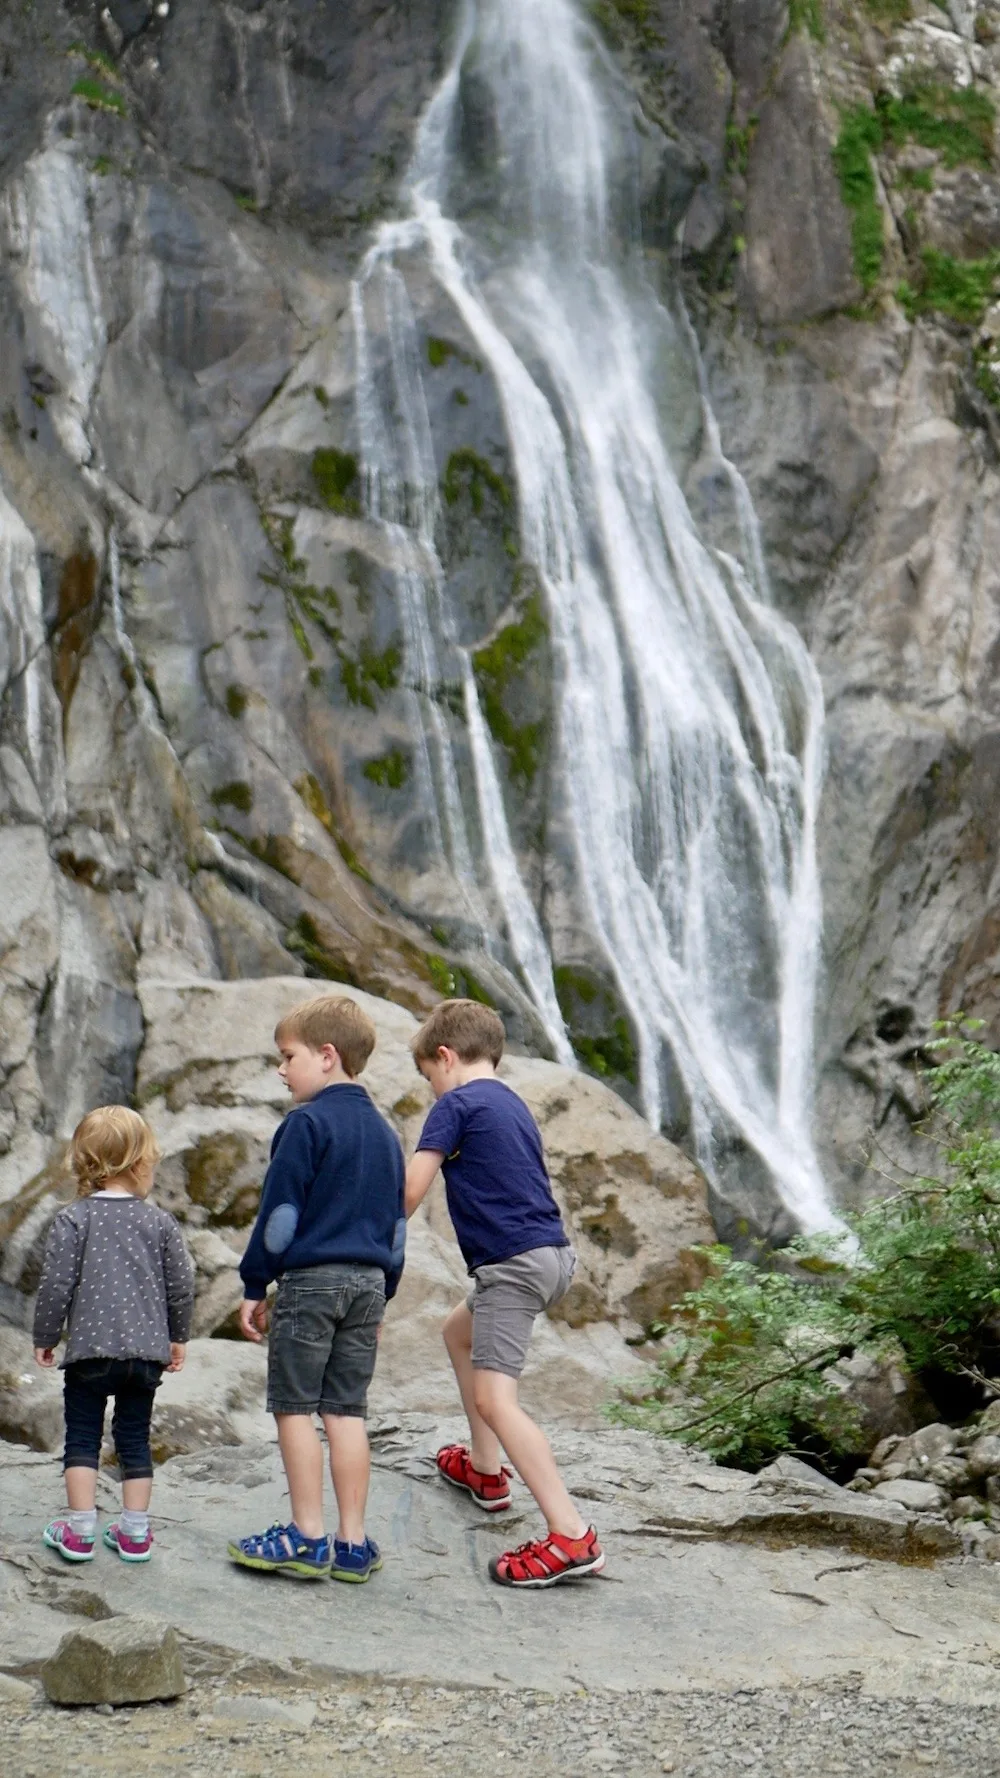 Can children visit Aber Falls